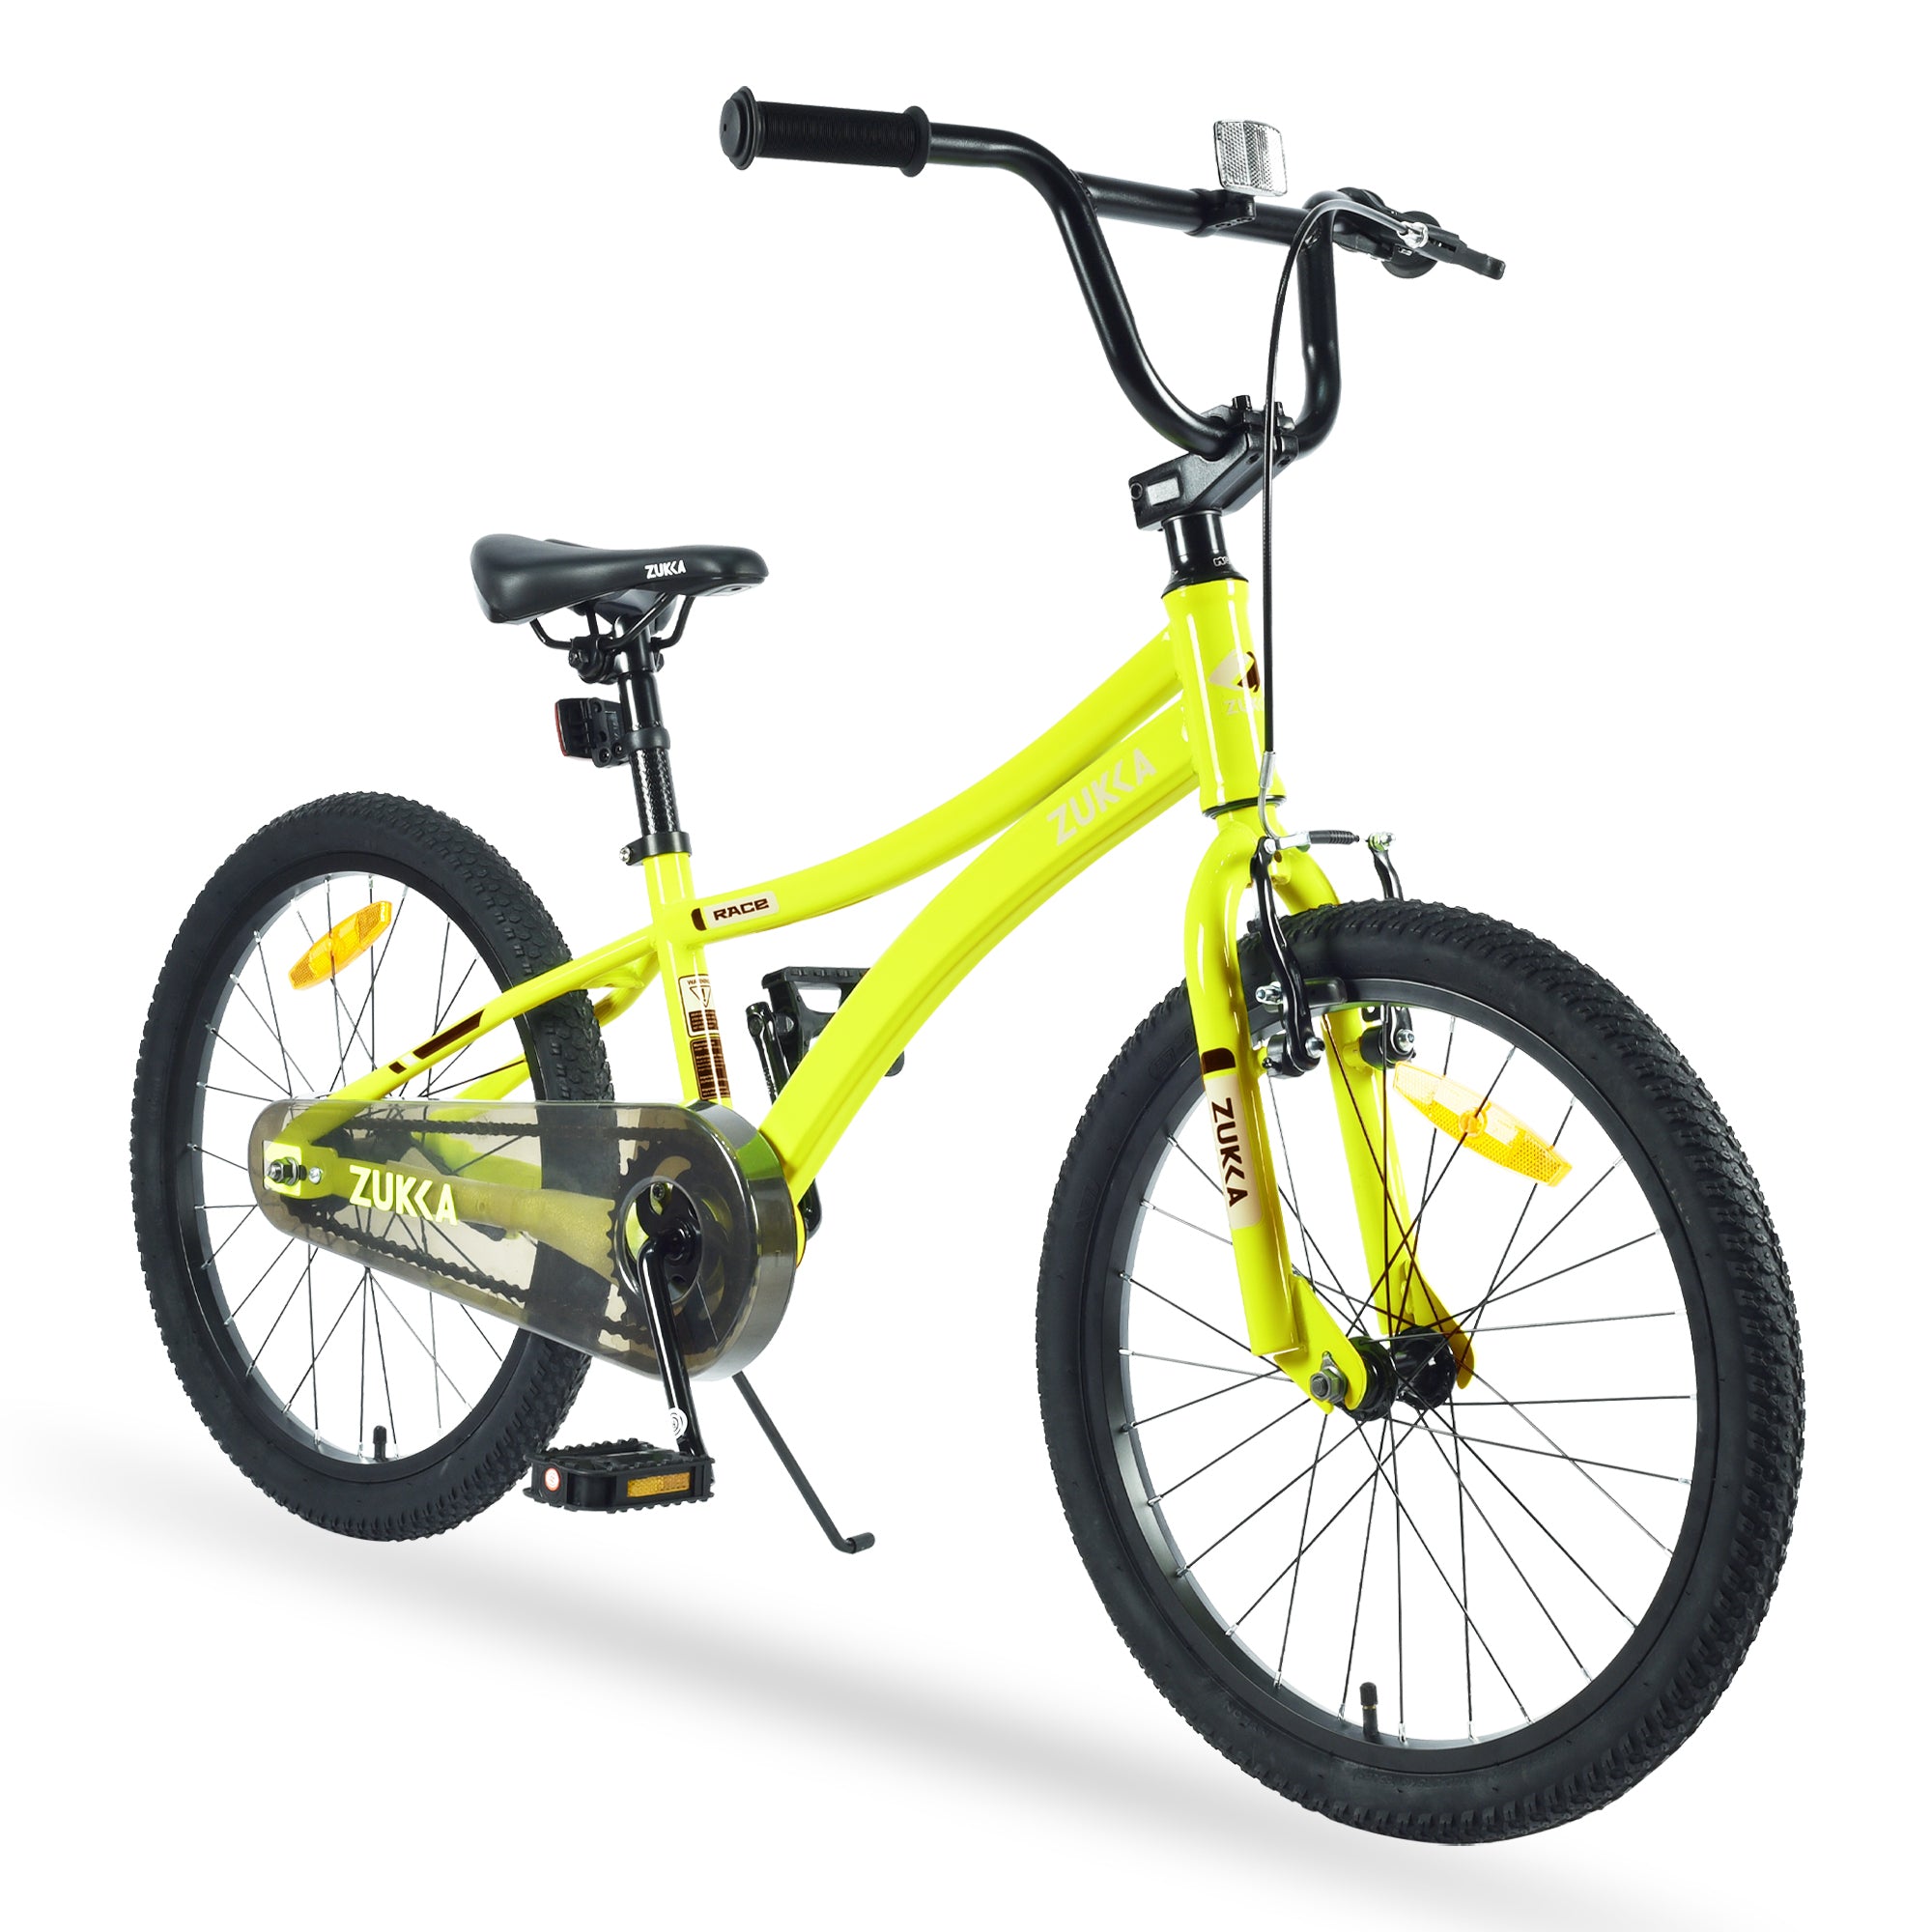 ZUKKA-Kids-Bike,20-Inch-Kids'-Bicycle-for-Boys-Age-7-10-Years,Multiple-Colors-